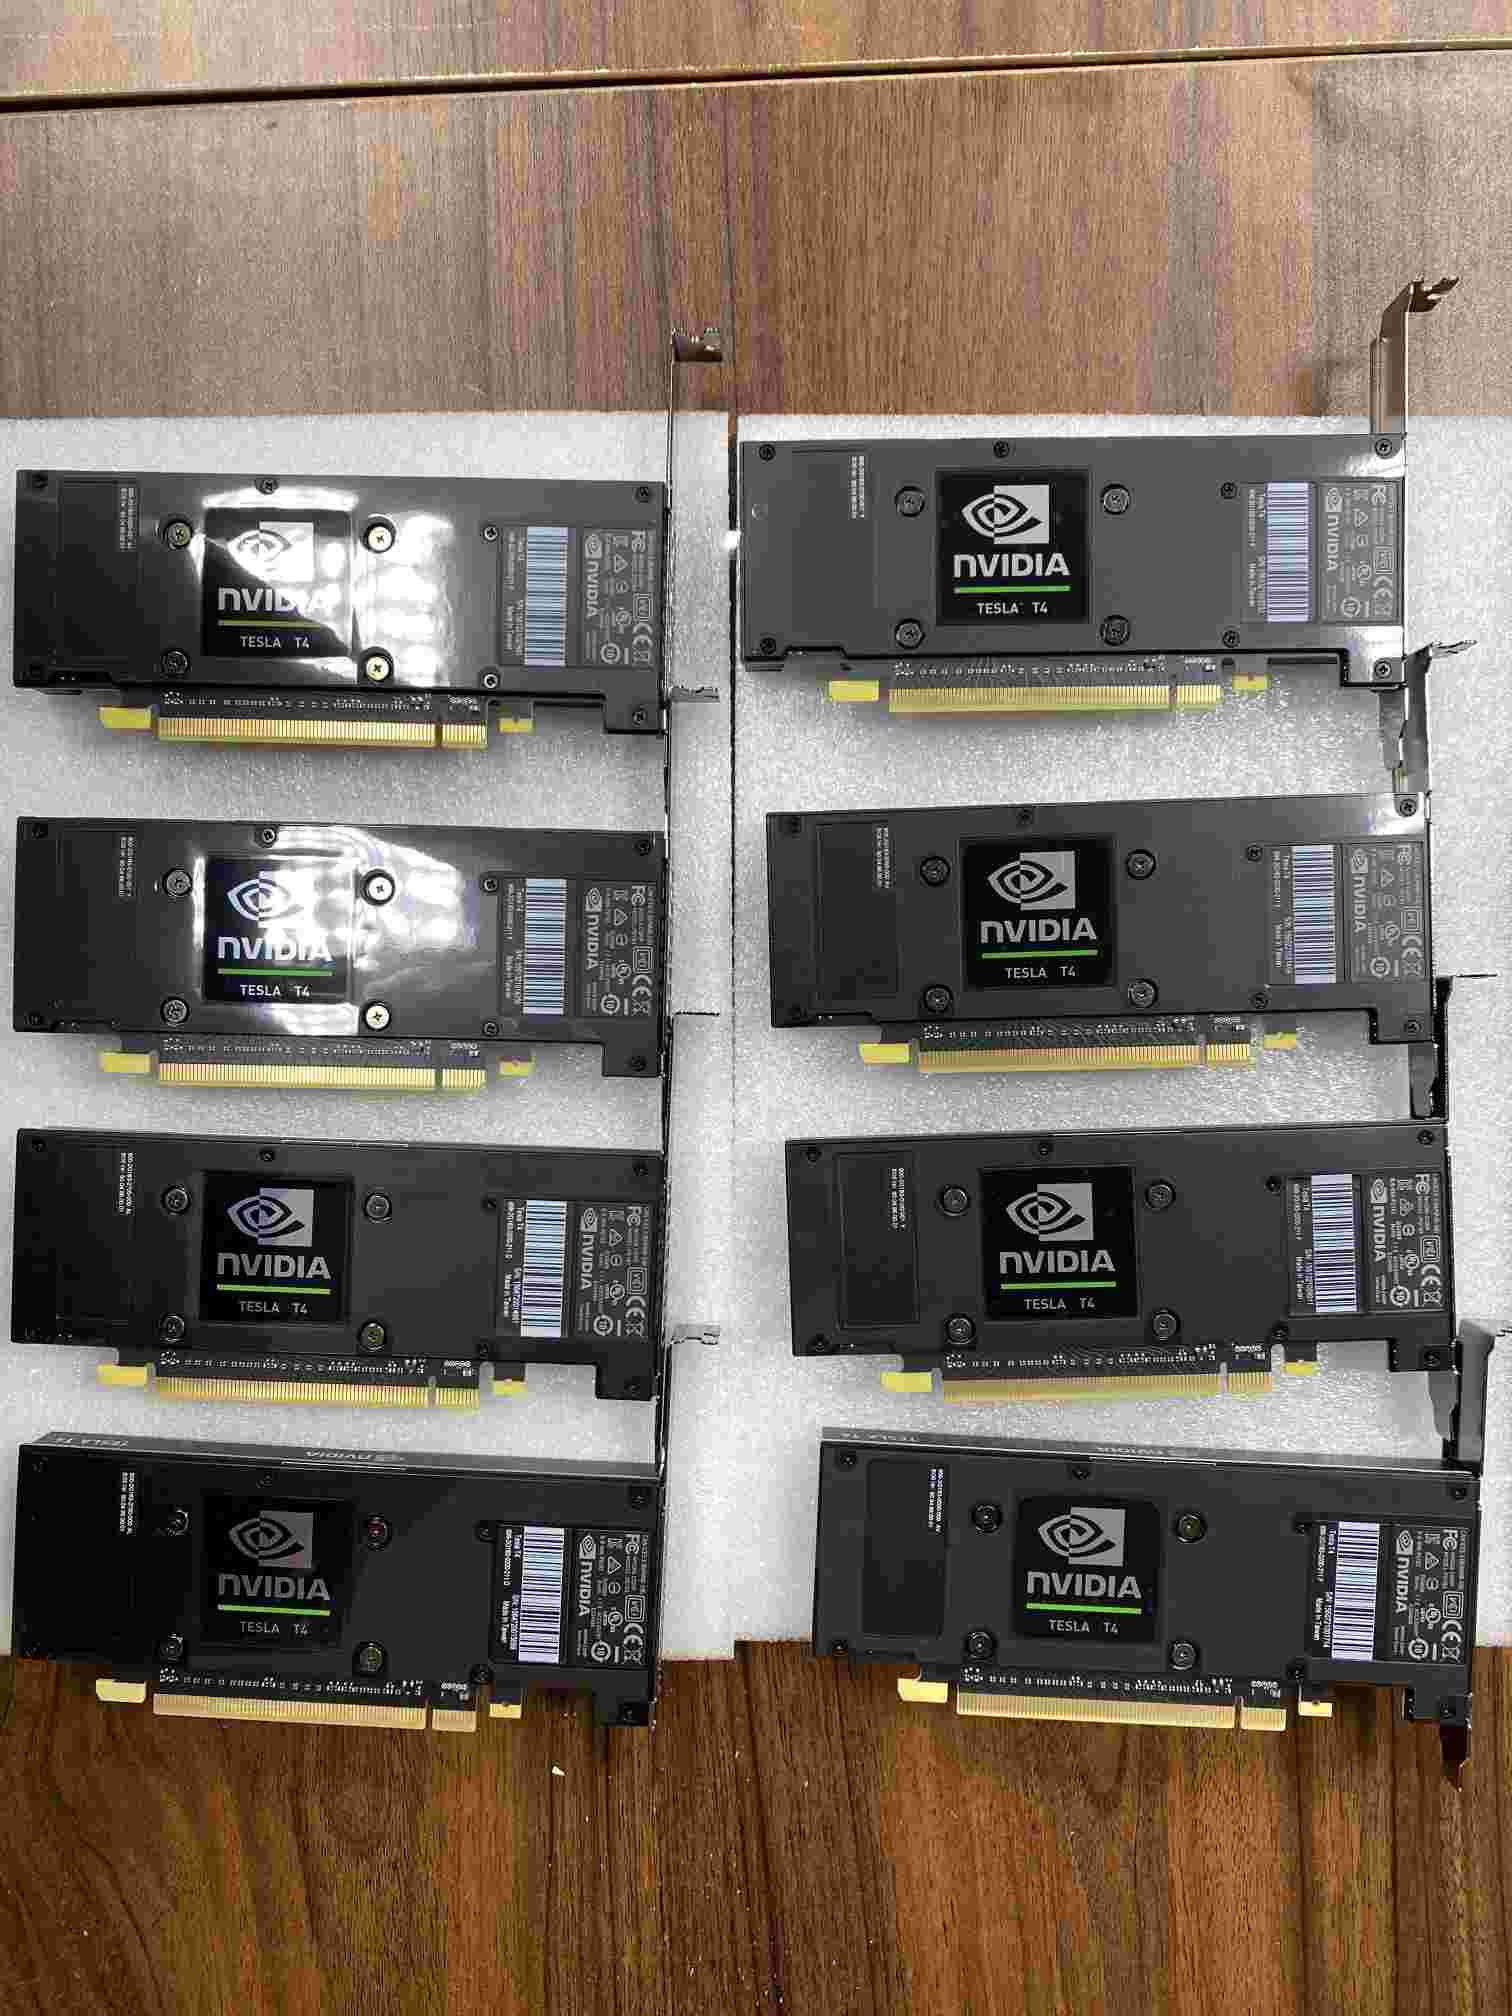 Intel/supermicro mainboard,Nvidia TESLA Graphics cards